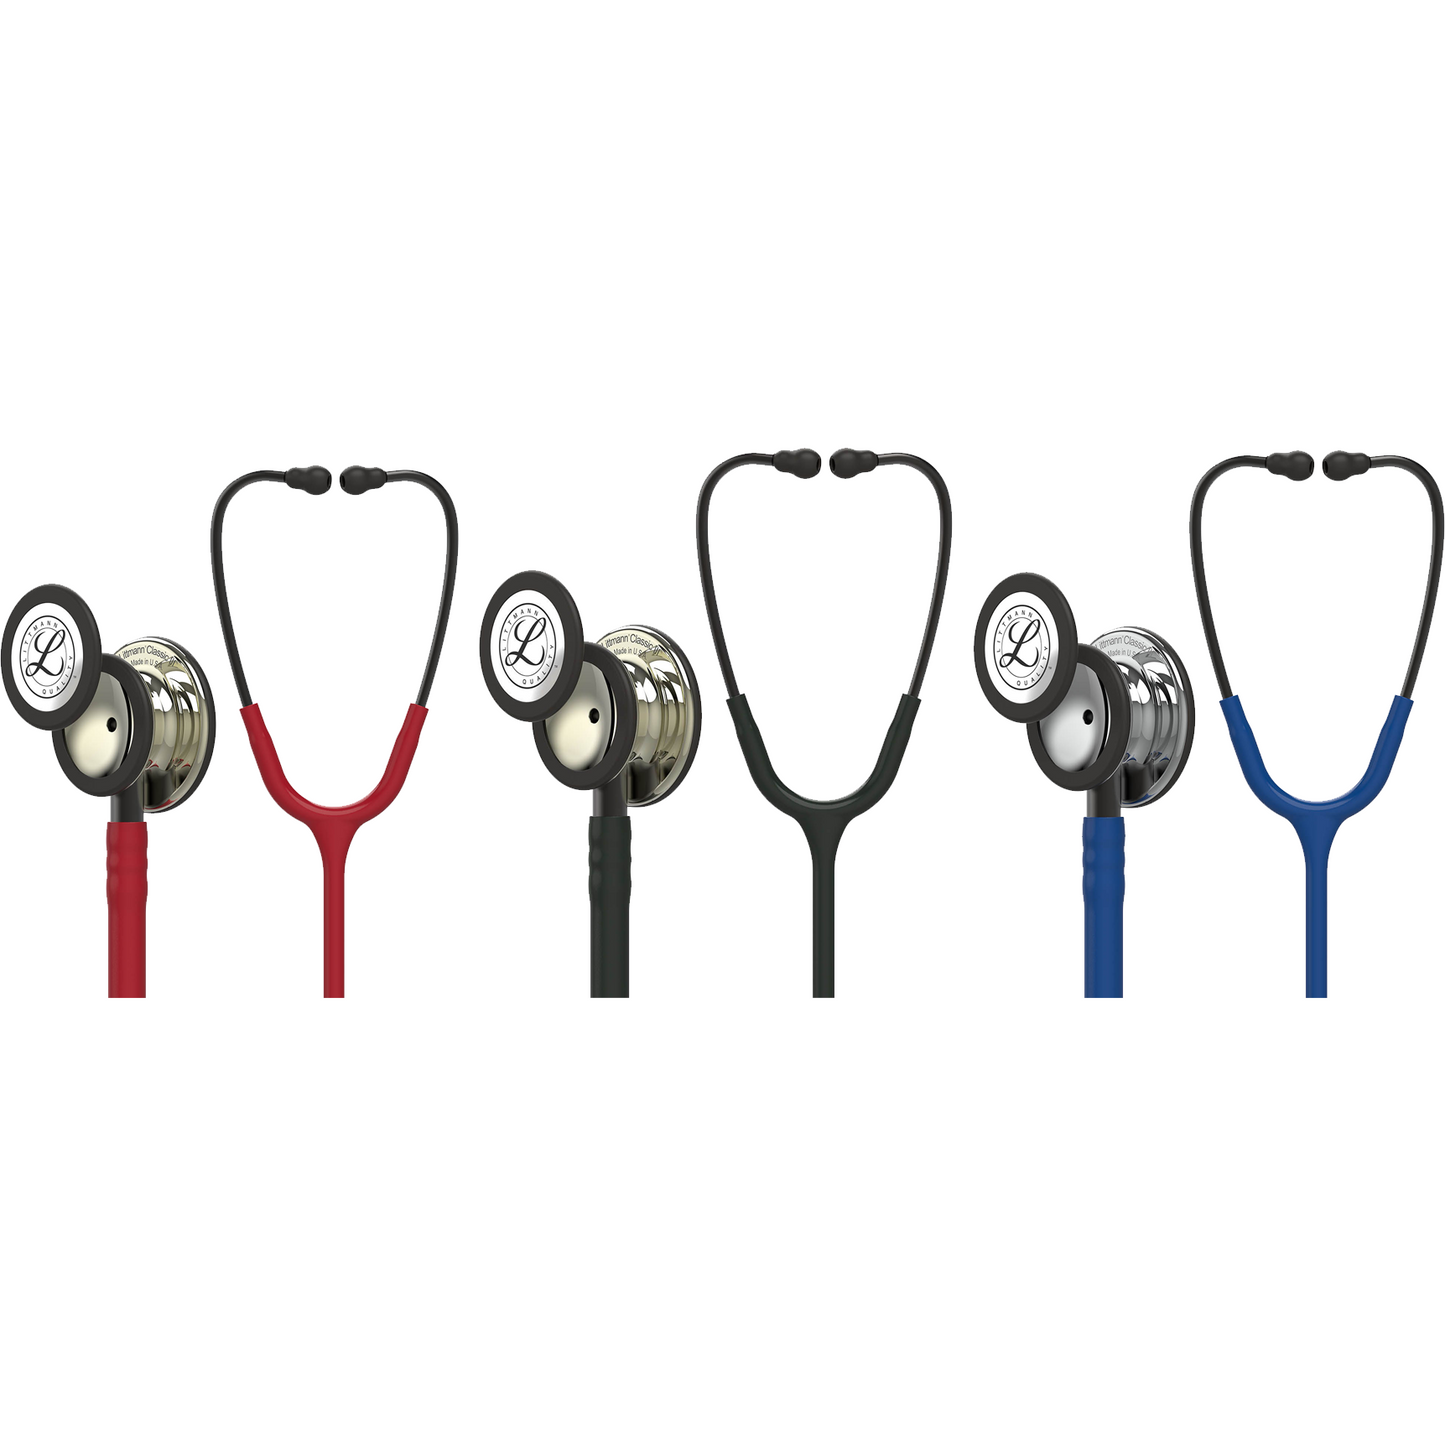 Advanced Nurses Kit - Littmann Classic III Stethoscope 5861, 5864 Or 5863 Sphyg, Thermometer, Scissors and More!